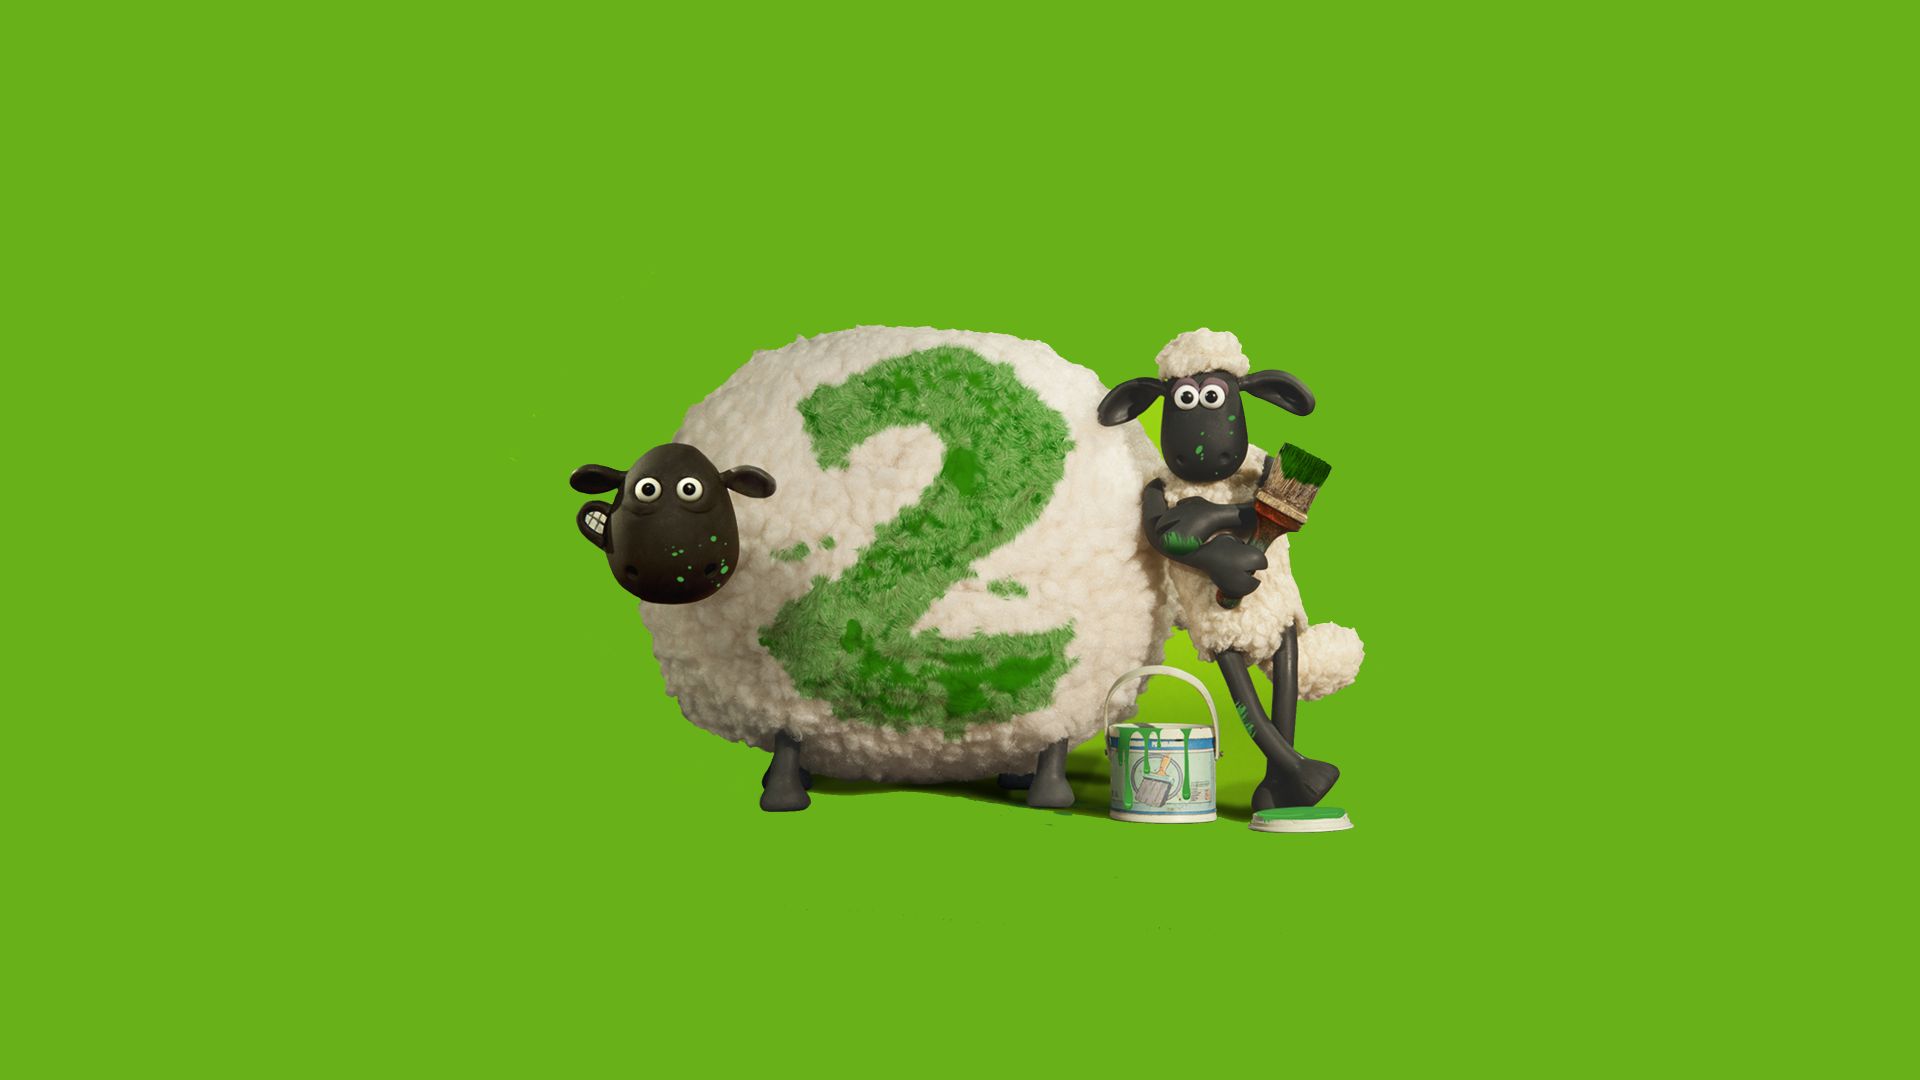 Барашек Шон, лучшие мультфильмы, Shaun the Sheep, best animation movies (horizontal)